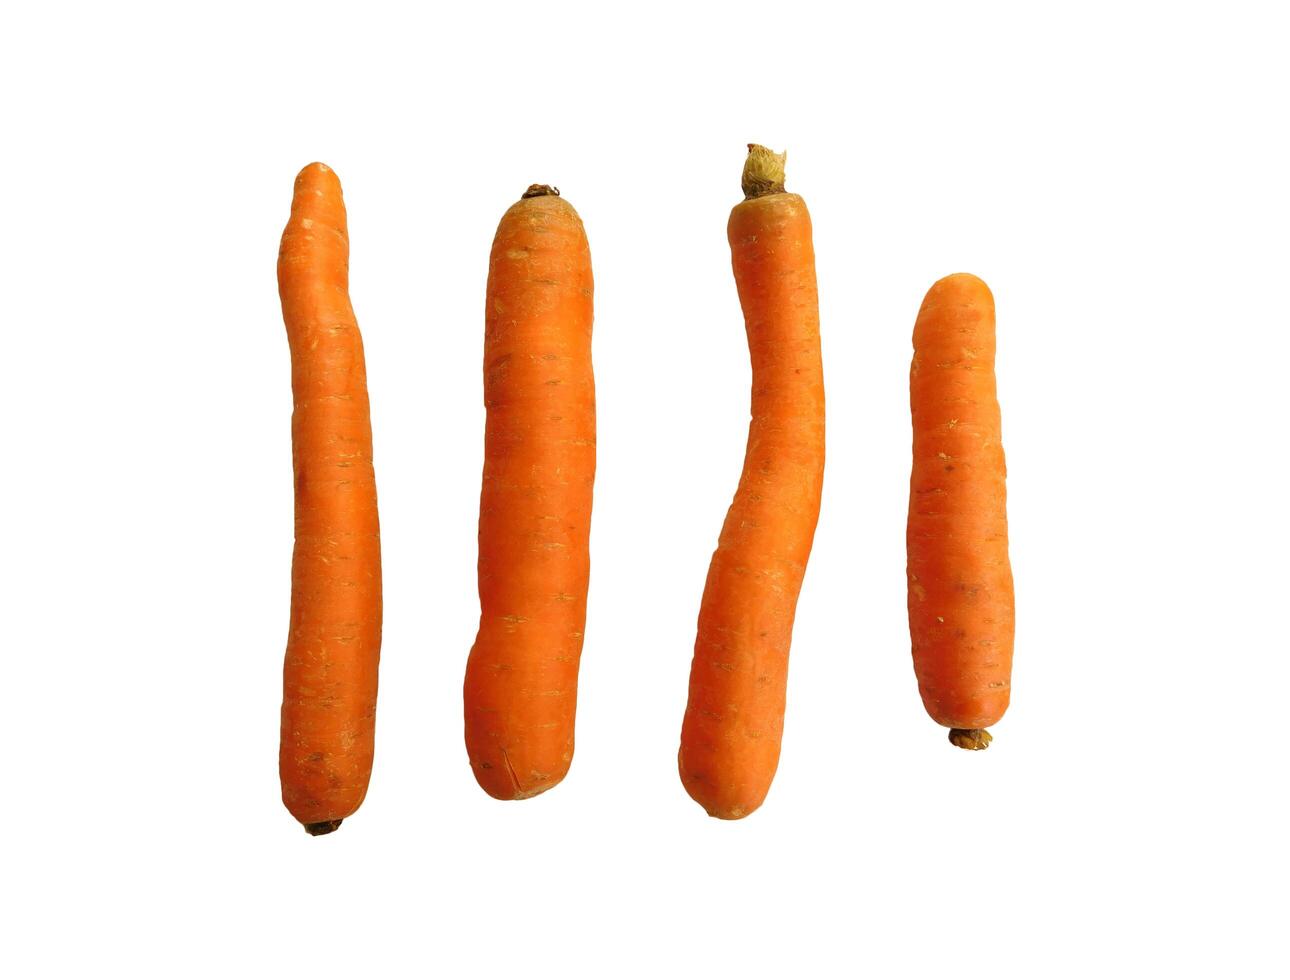 carote su sfondo bianco foto